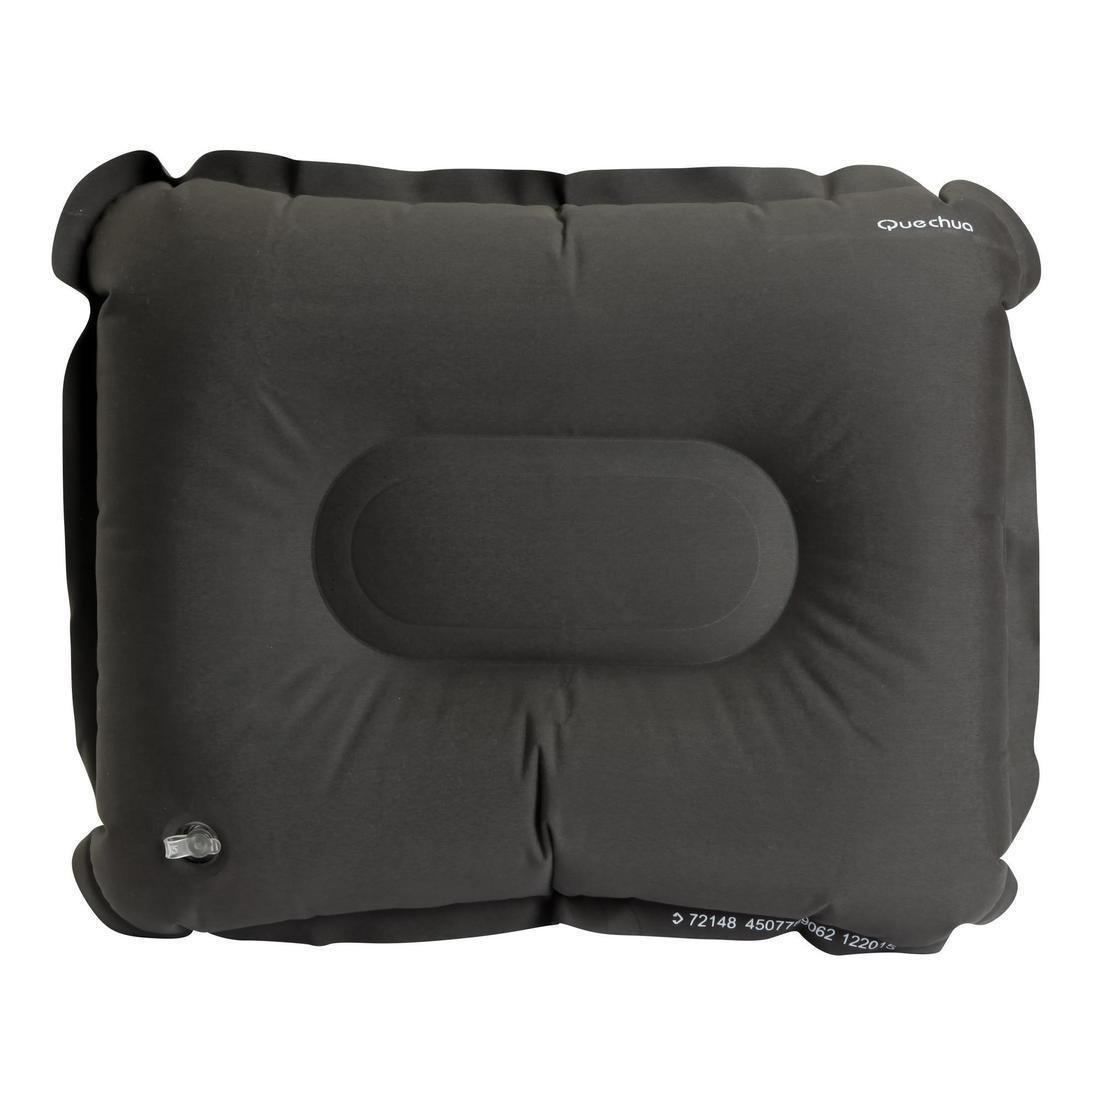 QUECHUA - Inflatable Camping Pillow - Air Basic, Navy